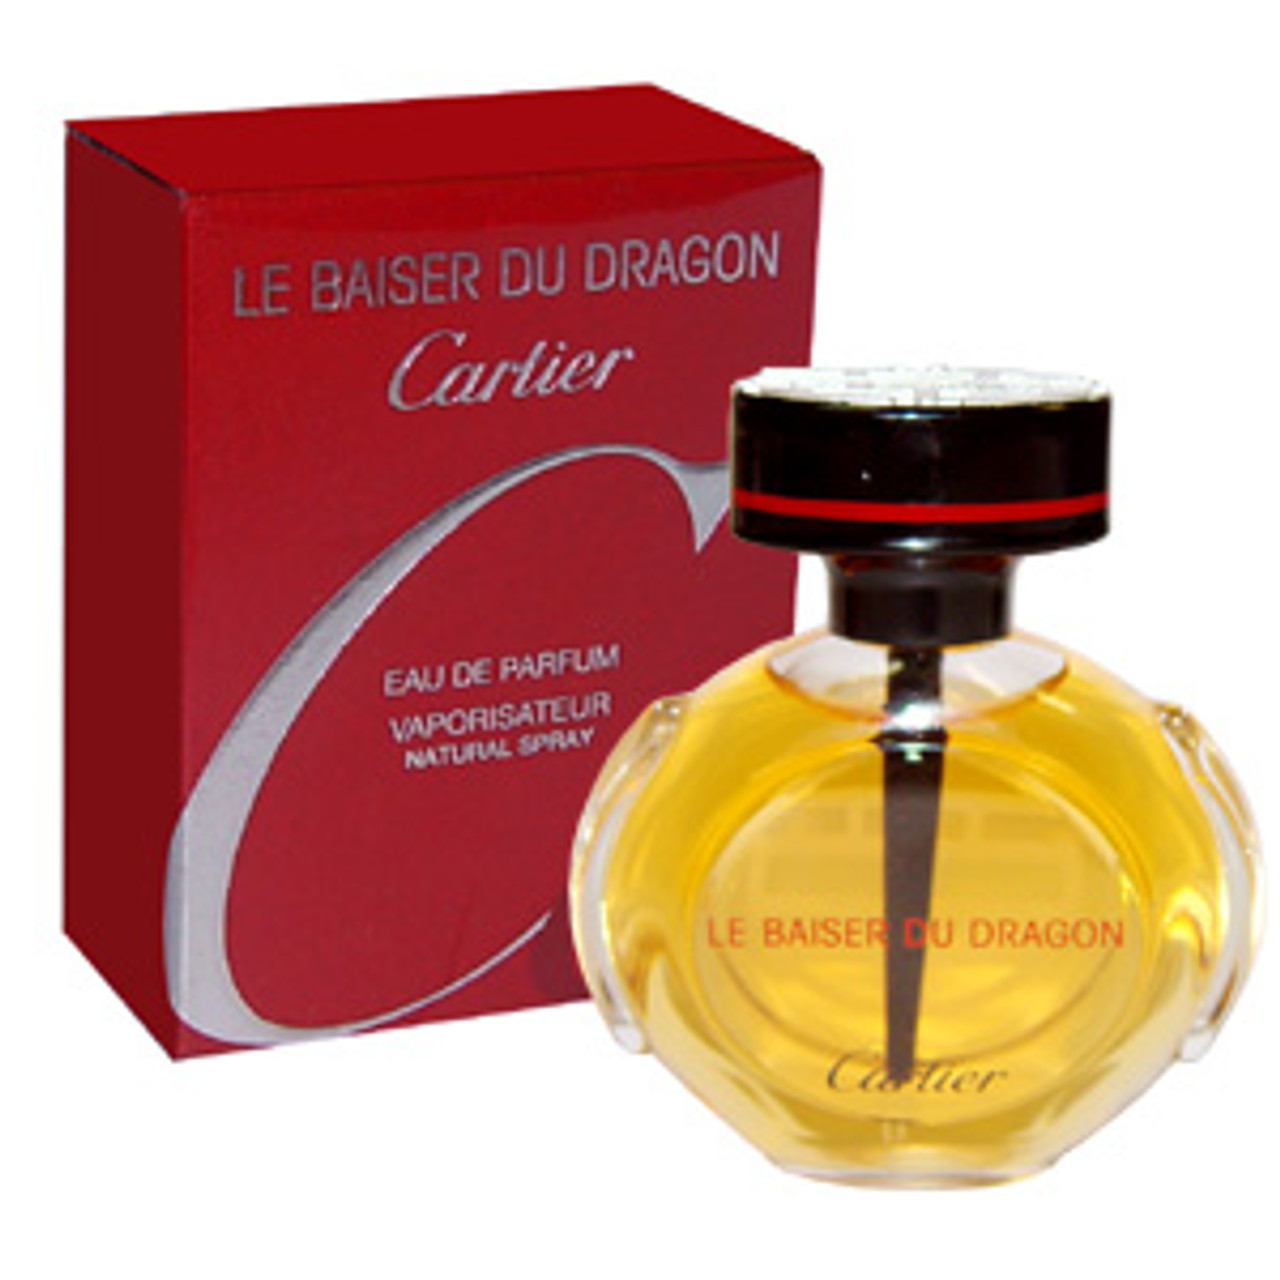 Туалетная вода дракон. Le baiser du Dragon Cartier. Le baiser du Dragon Cartier флакон. Духи le baiser de. Духи дракон женские.